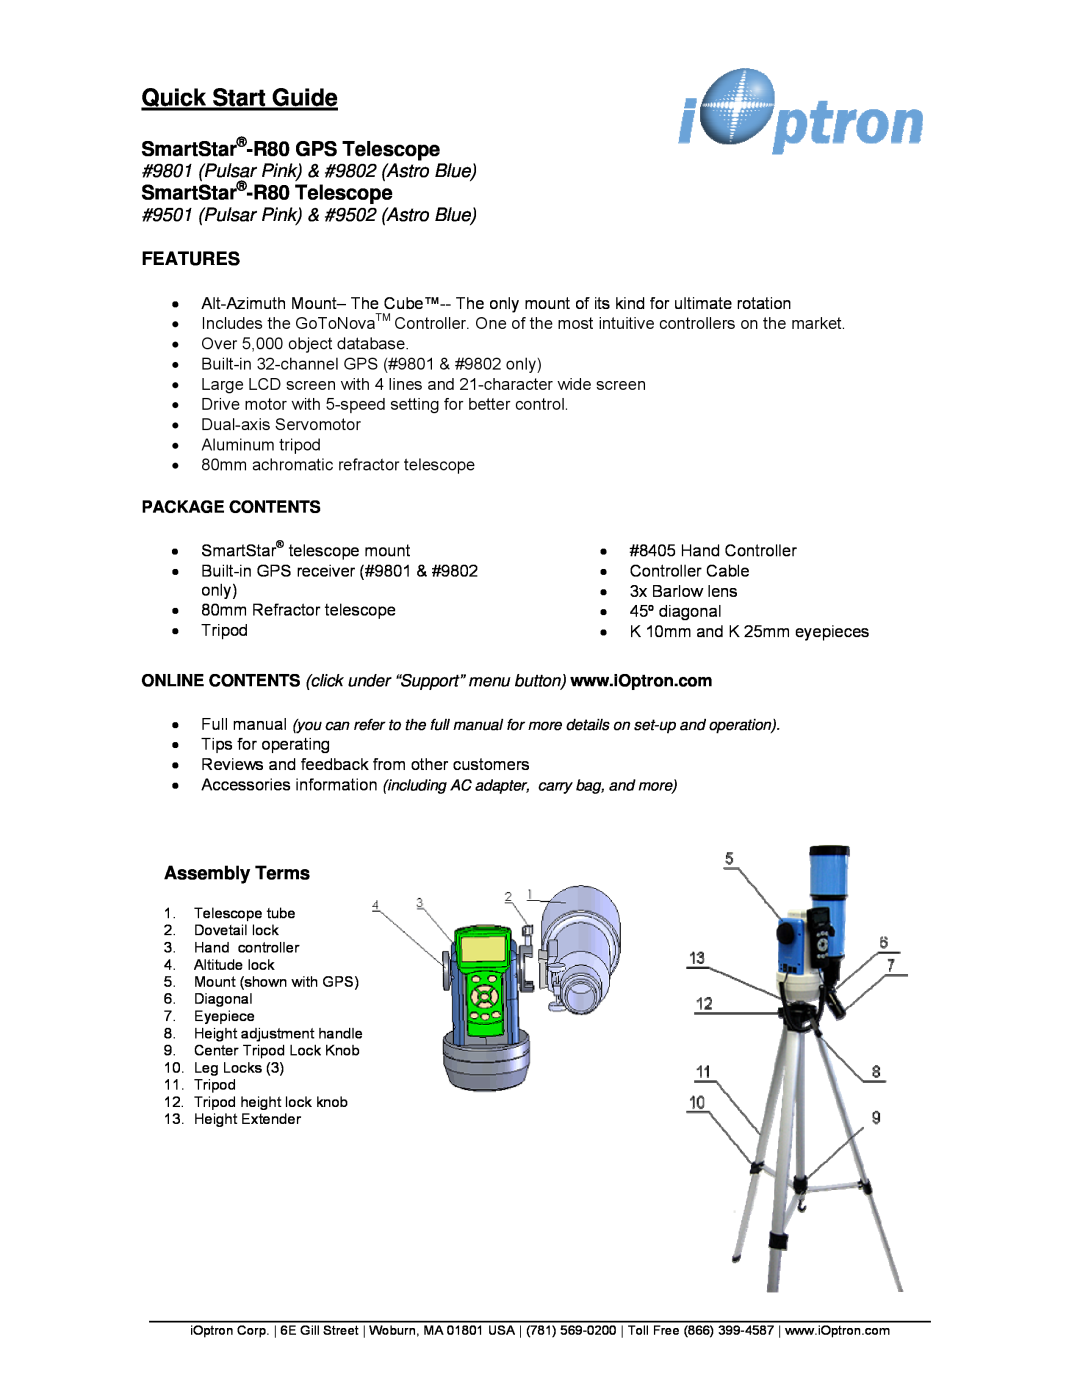 iOptron 9502, 9501 quick start SmartStar-R80 GPS Telescope, SmartStar-R80 Telescope, Package Contents, Quick Start Guide 